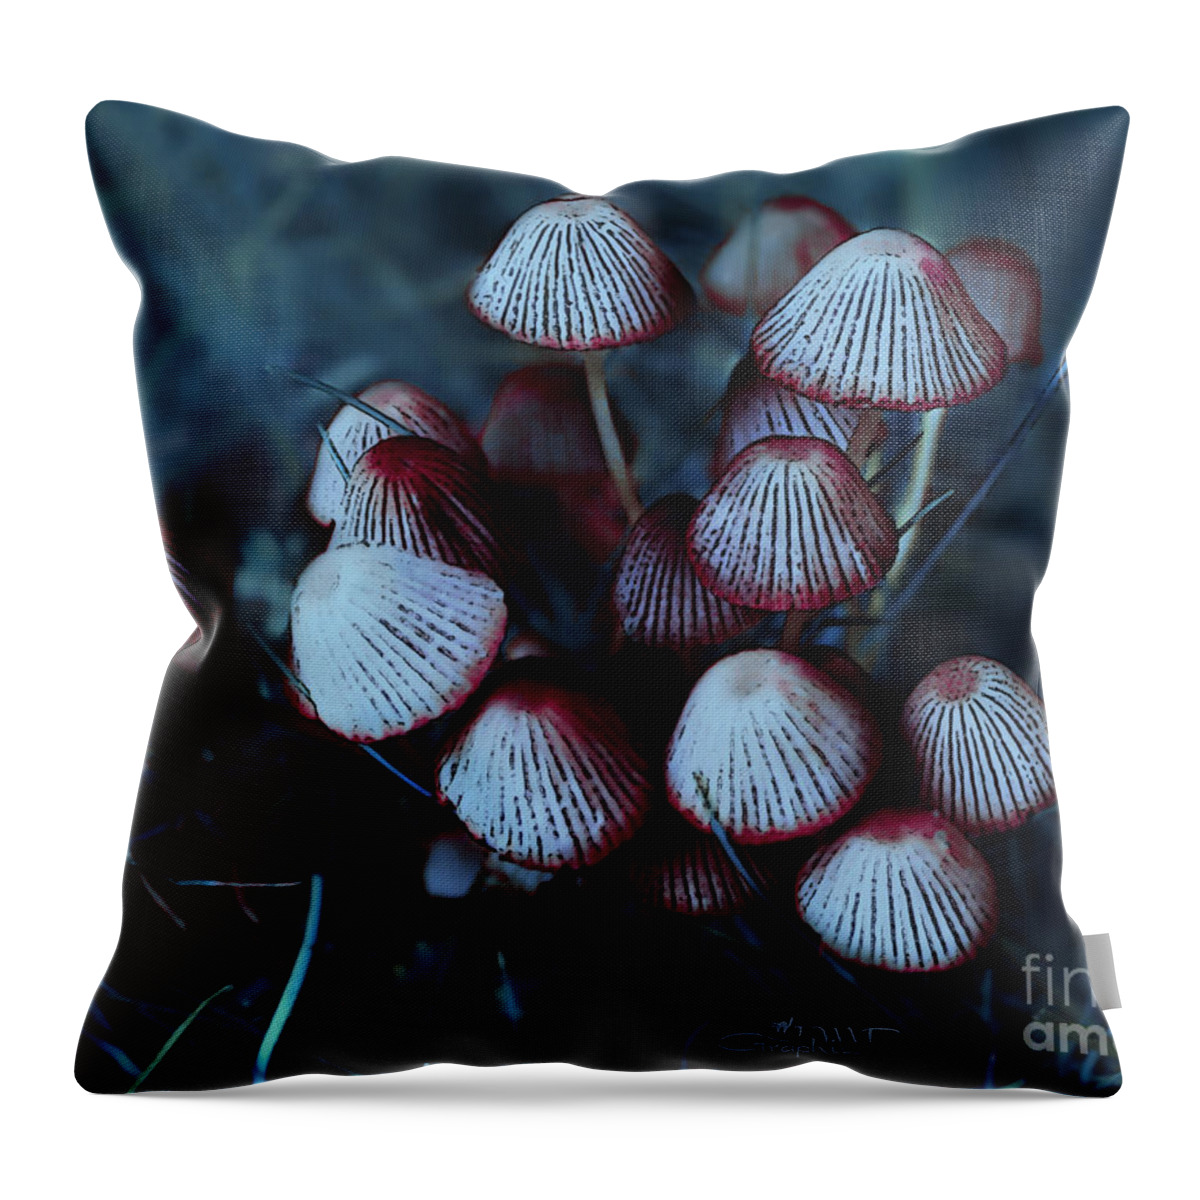 Mushroom Throw Pillow featuring the photograph Faerie Houses by Jutta Maria Pusl